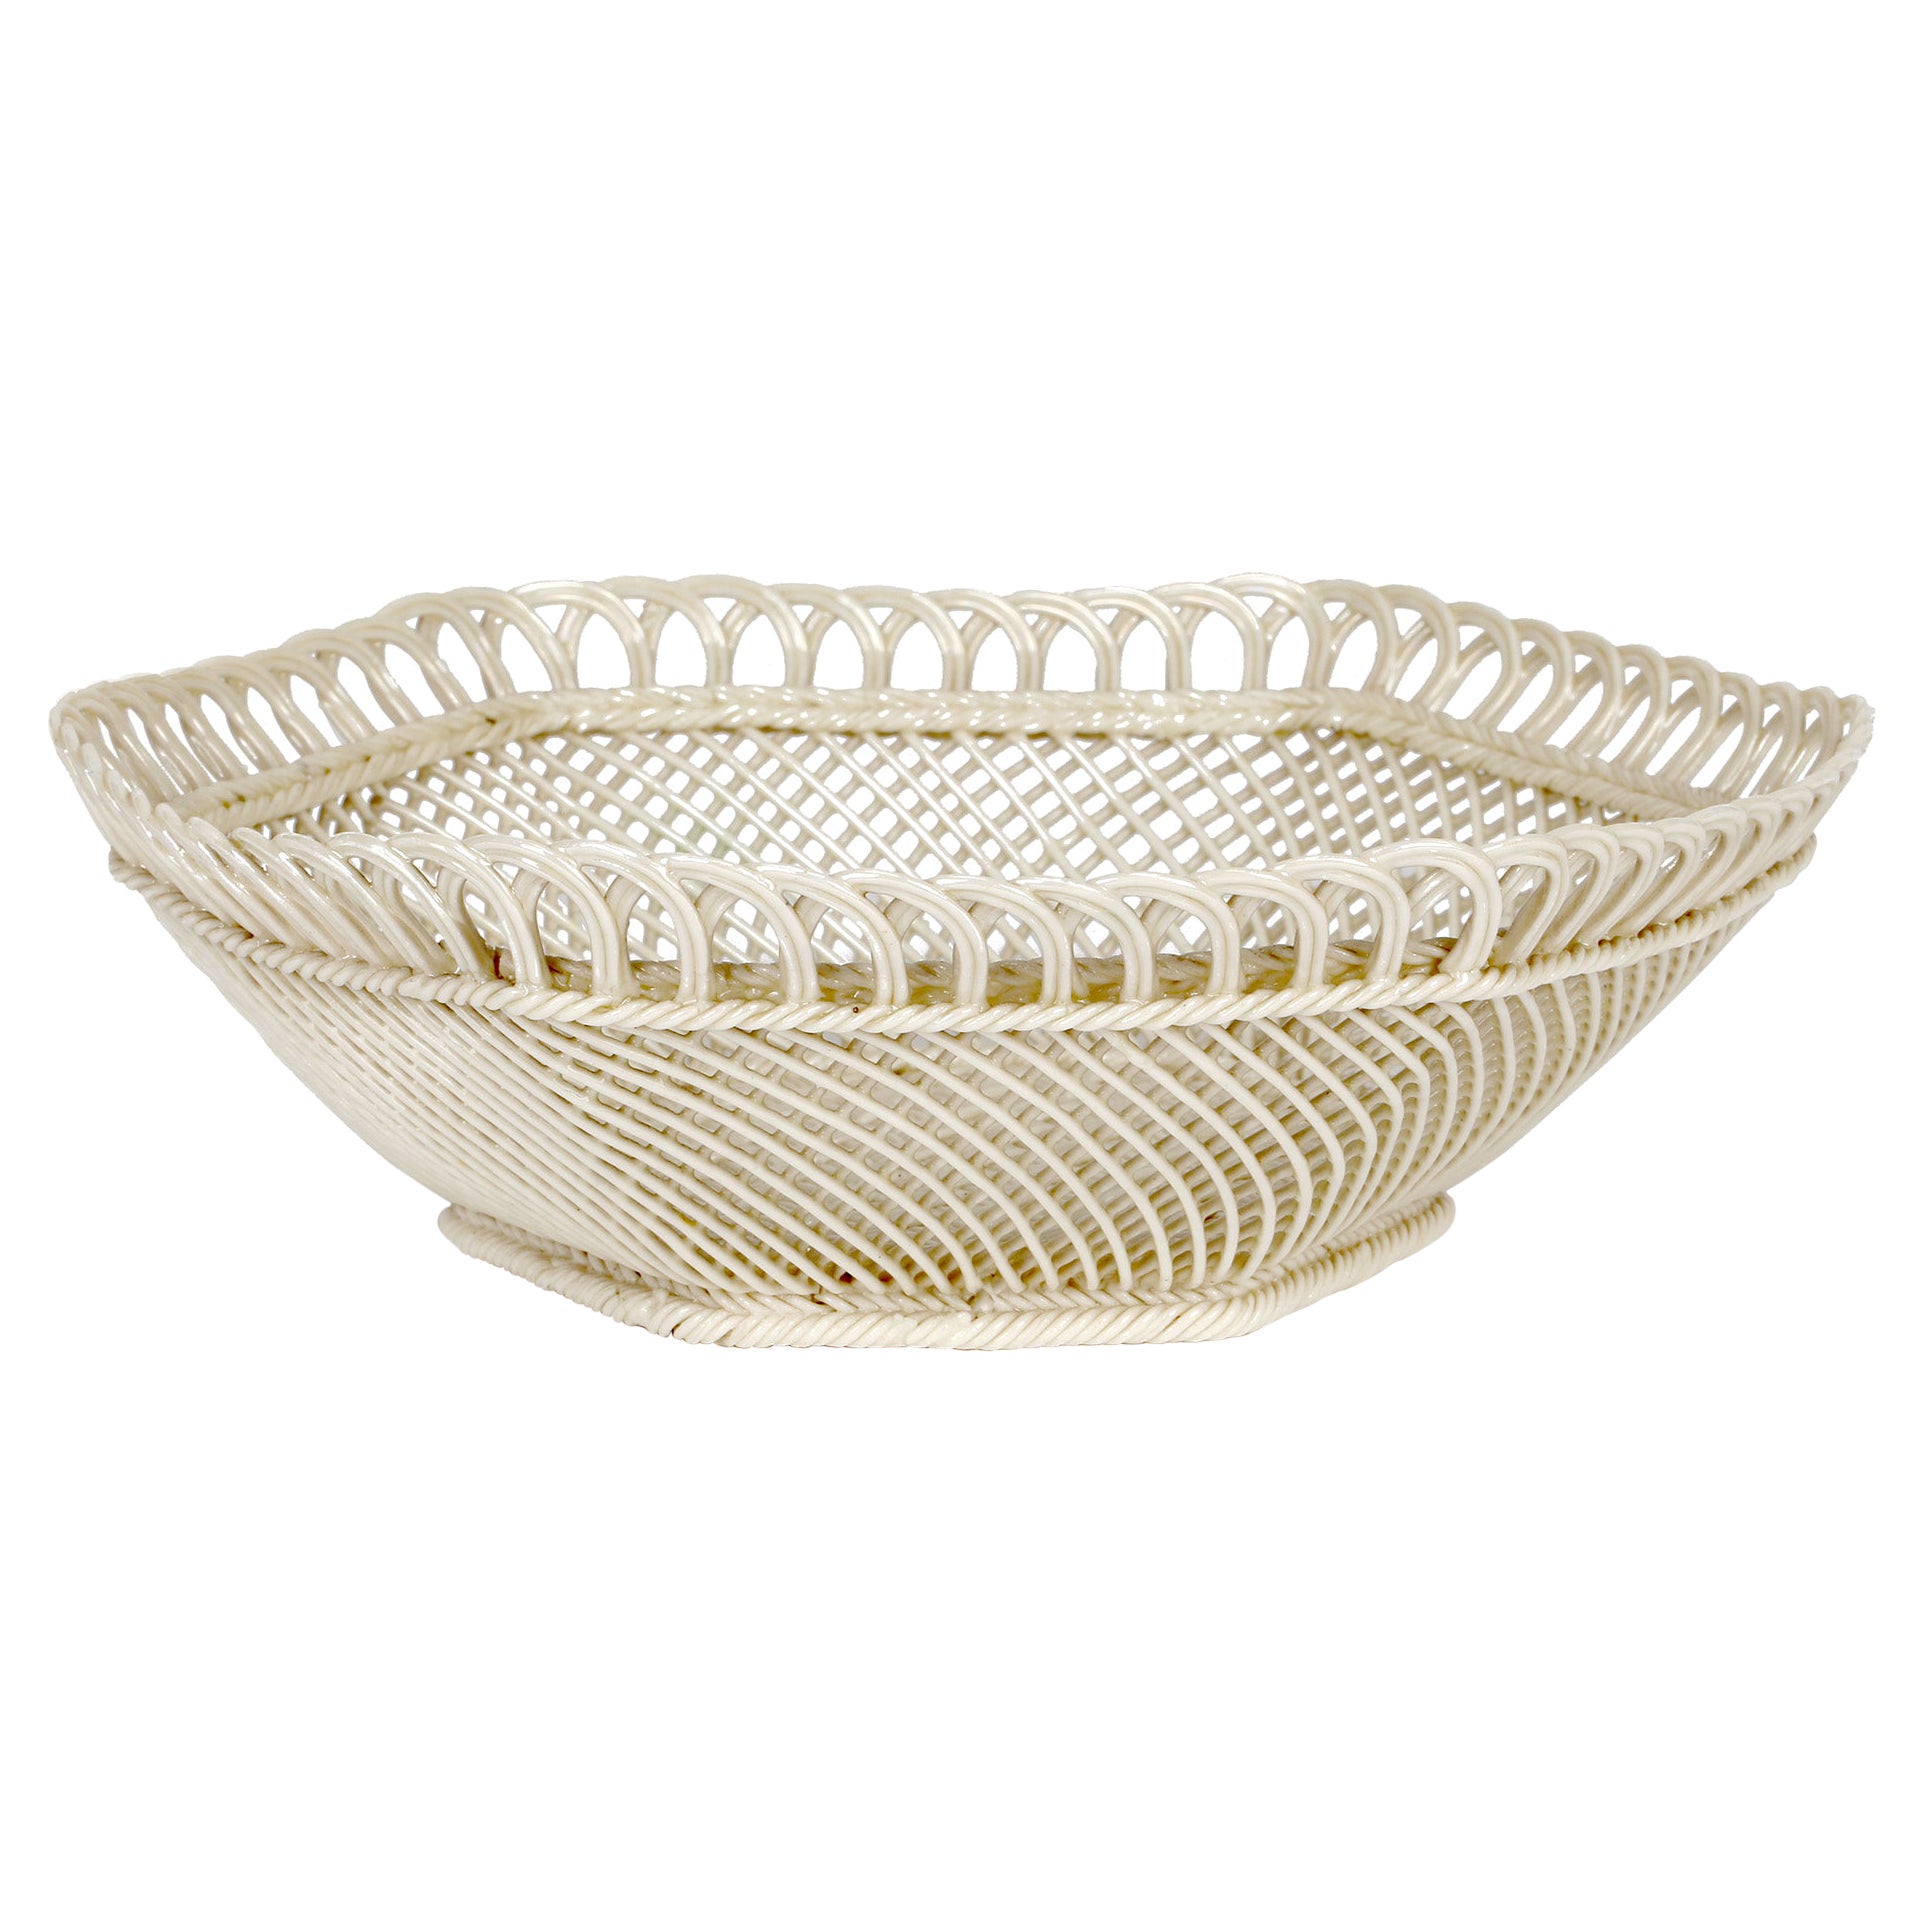 Belleek Irish Antique Porcelain Hexagonal Shaped Lustre Glazed Basket